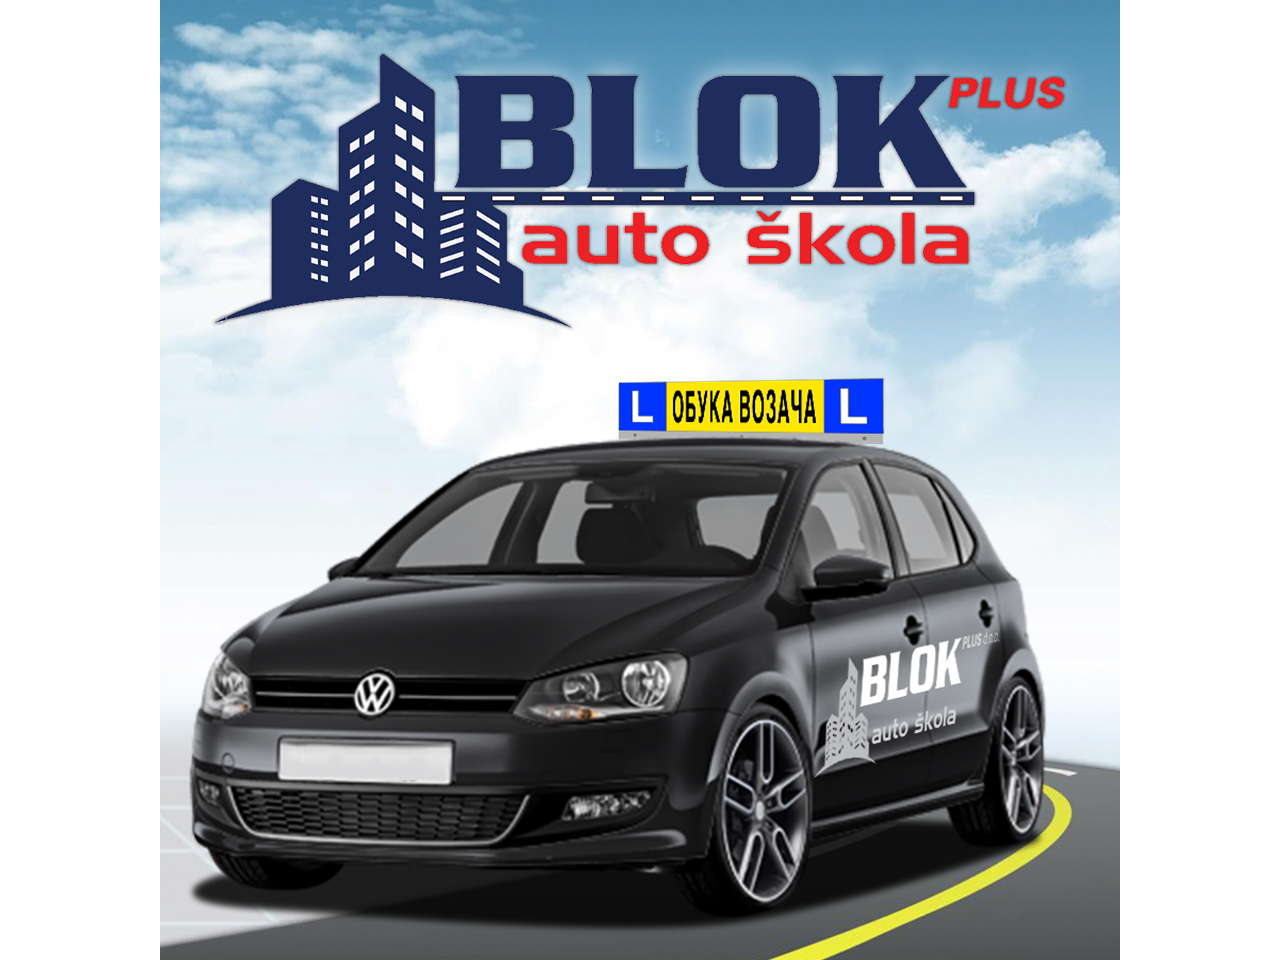 AUTO ŠKOLA BLOK PLUS Auto škole Beograd